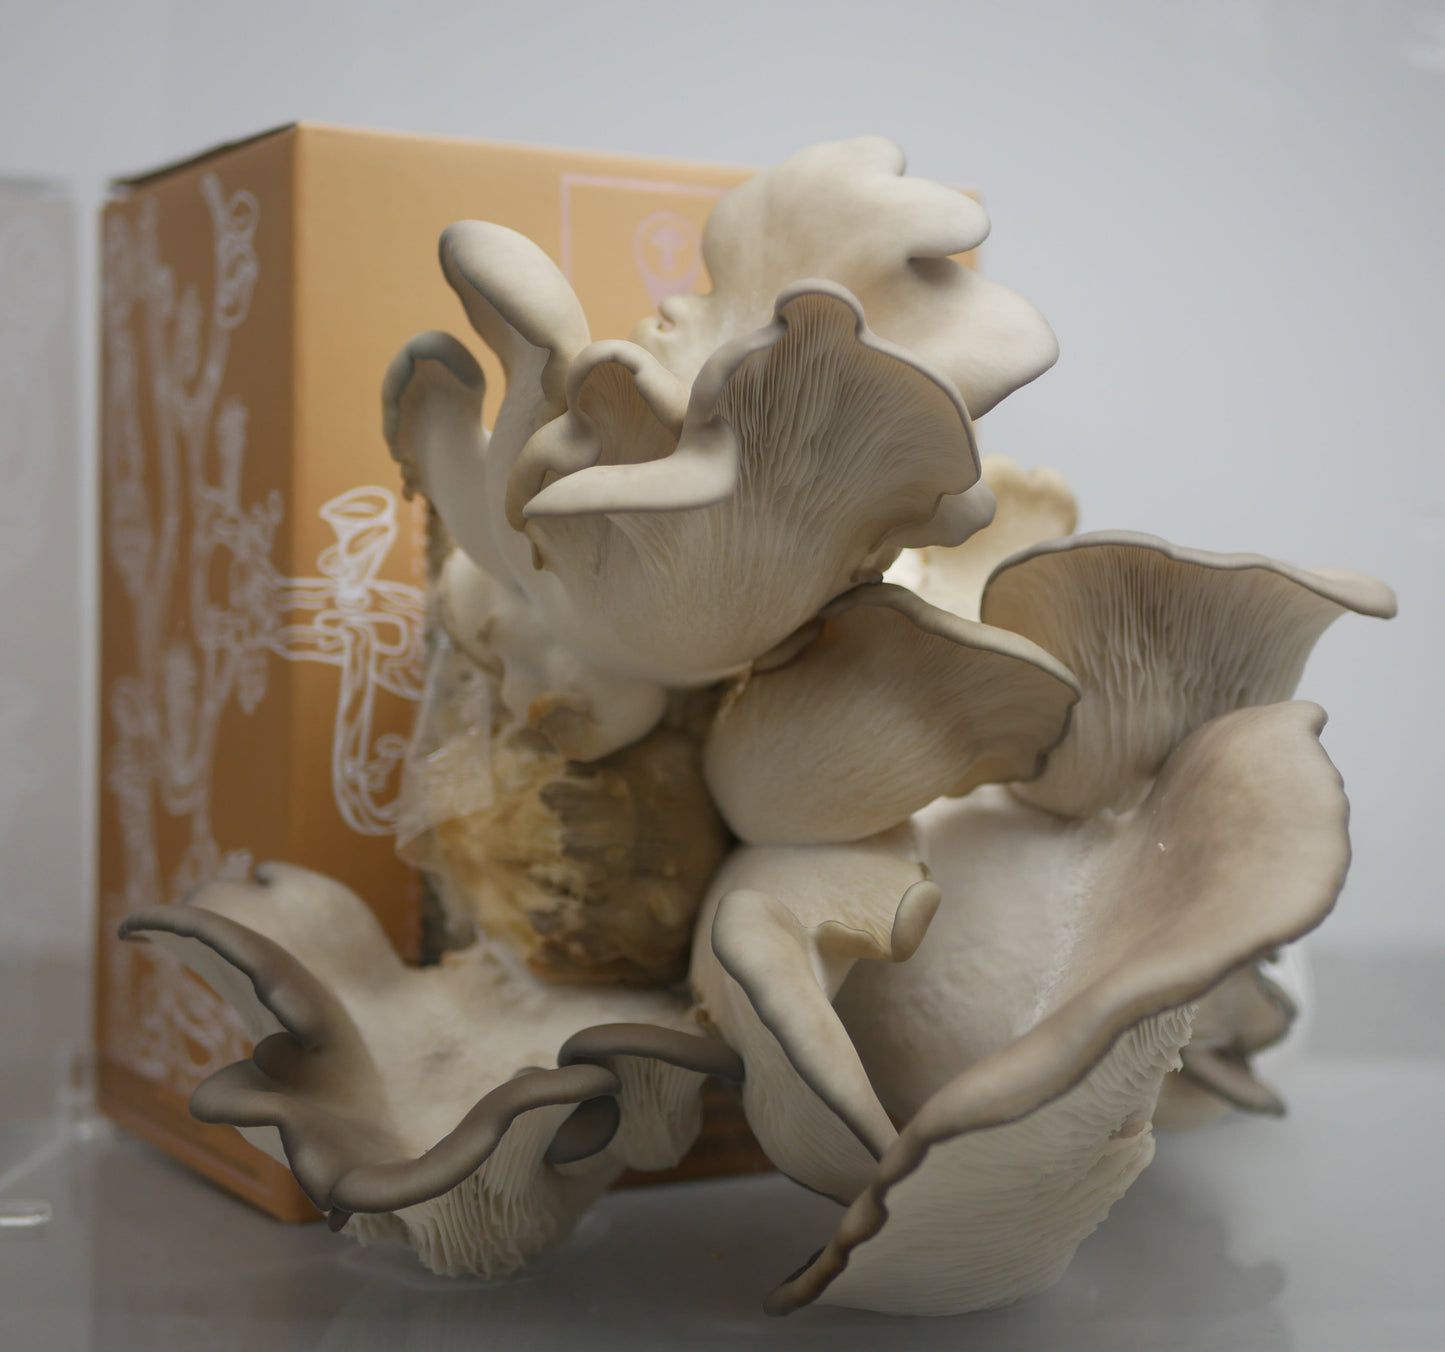 DS - Mushroom Grow Kits